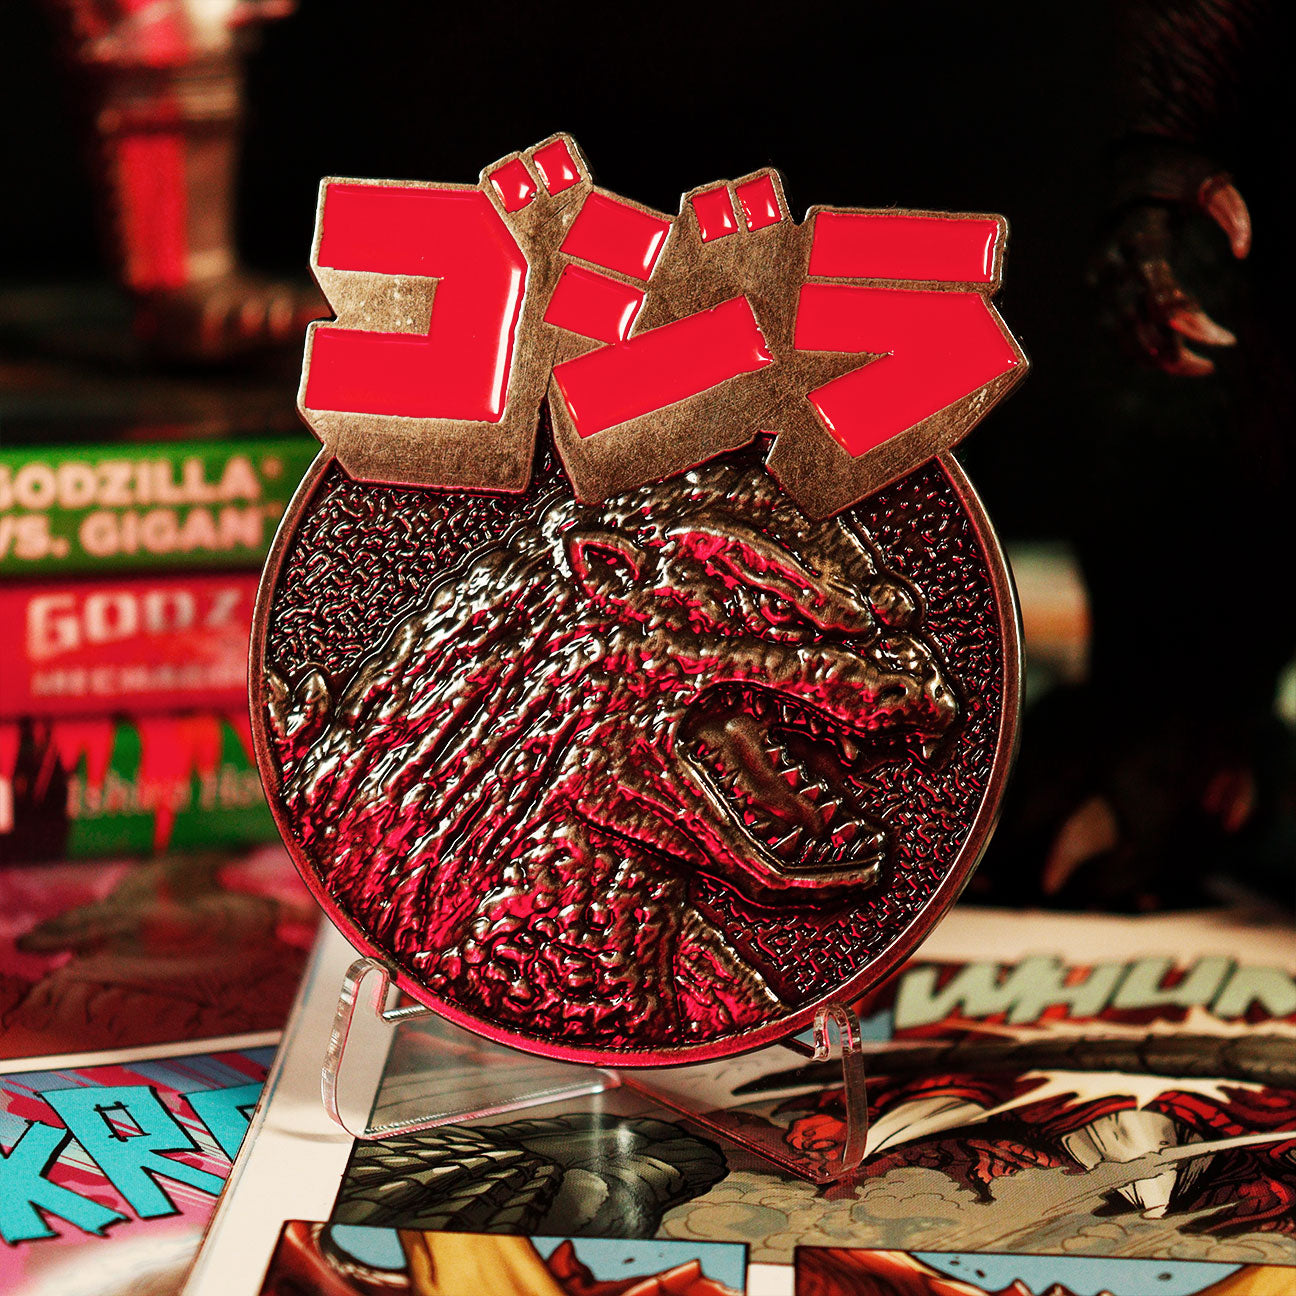 Godzilla 70th Anniversary Limited Edition Medallion